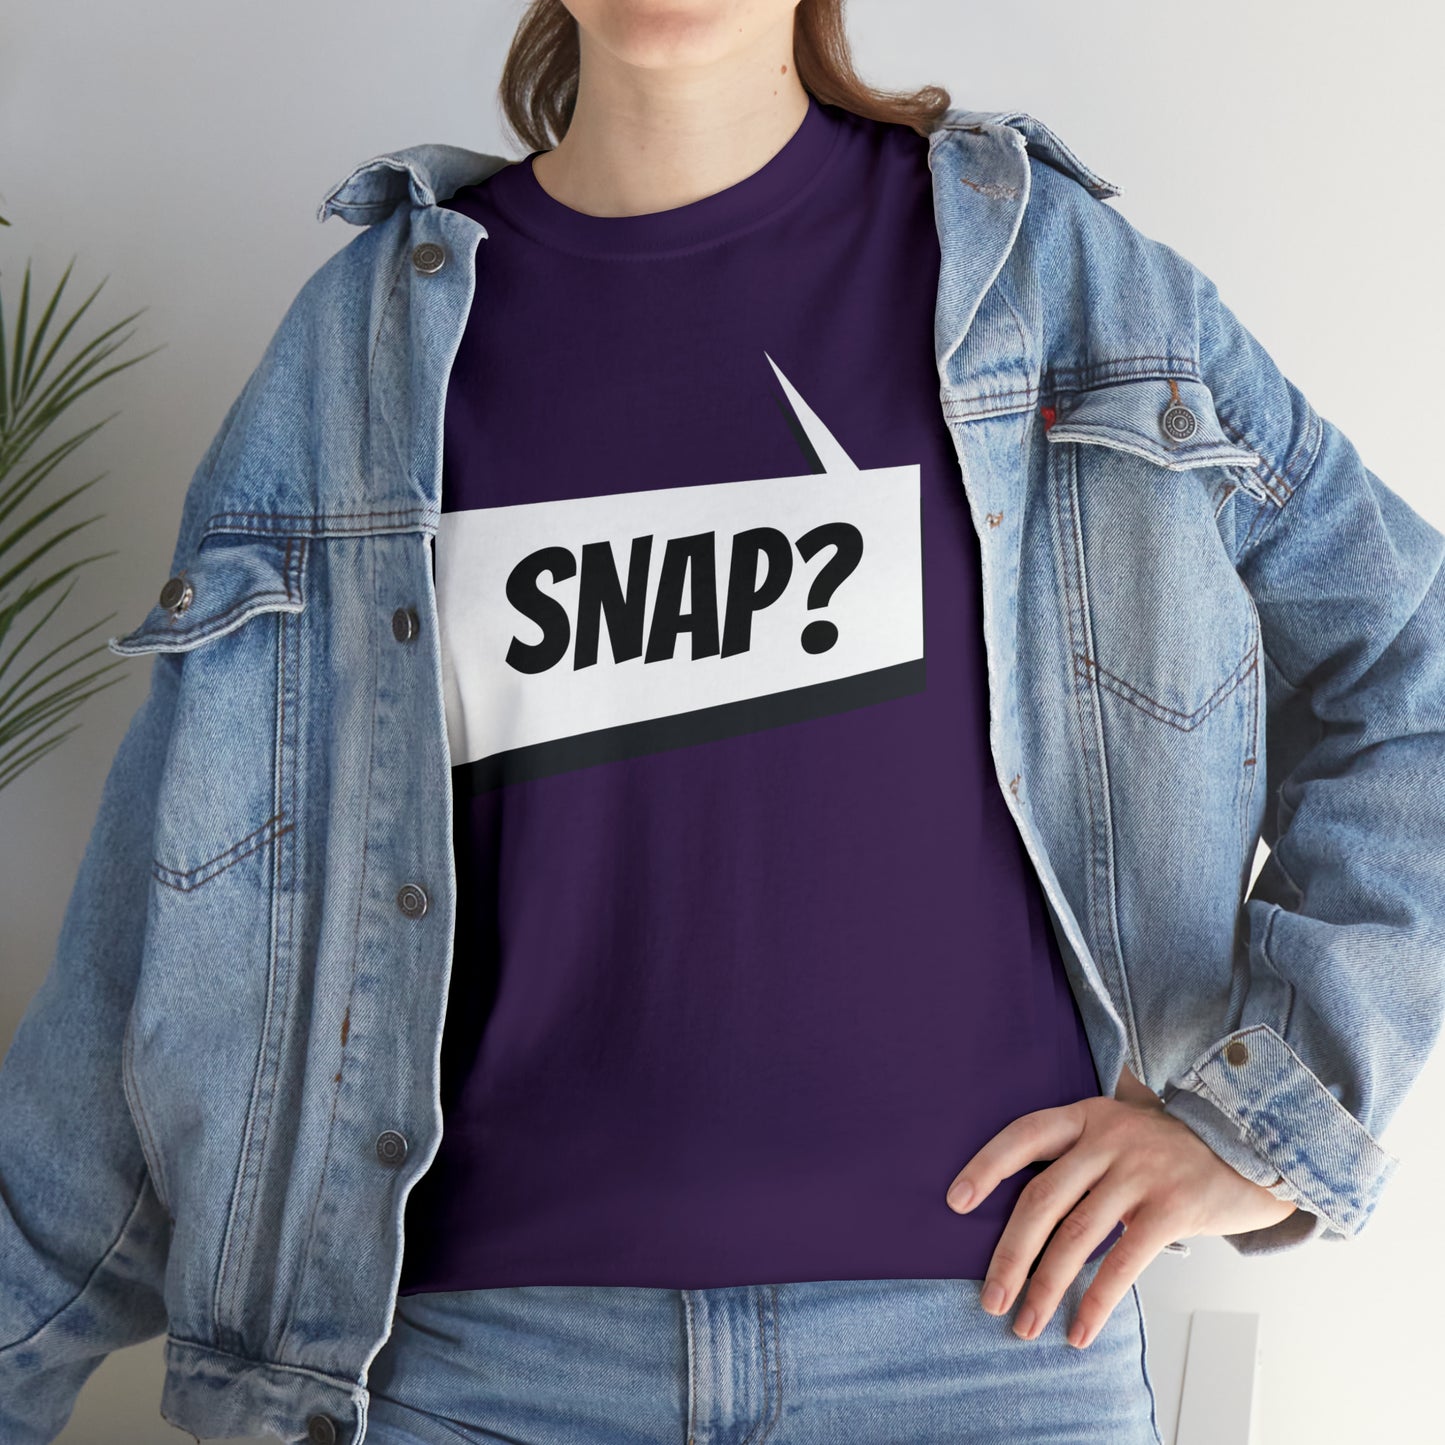 "Snap?" Marvel Snap inspired Unisex Heavy Cotton Tee